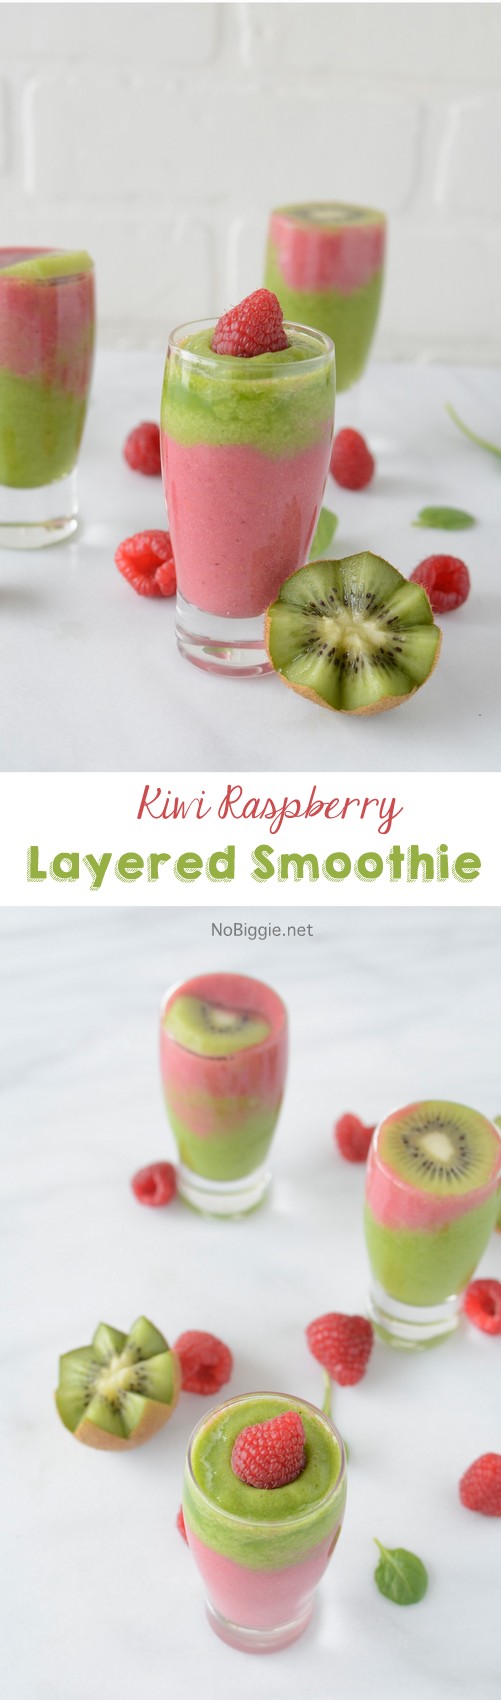 kiwi raspberry layered smoothie | NoBiggie.net